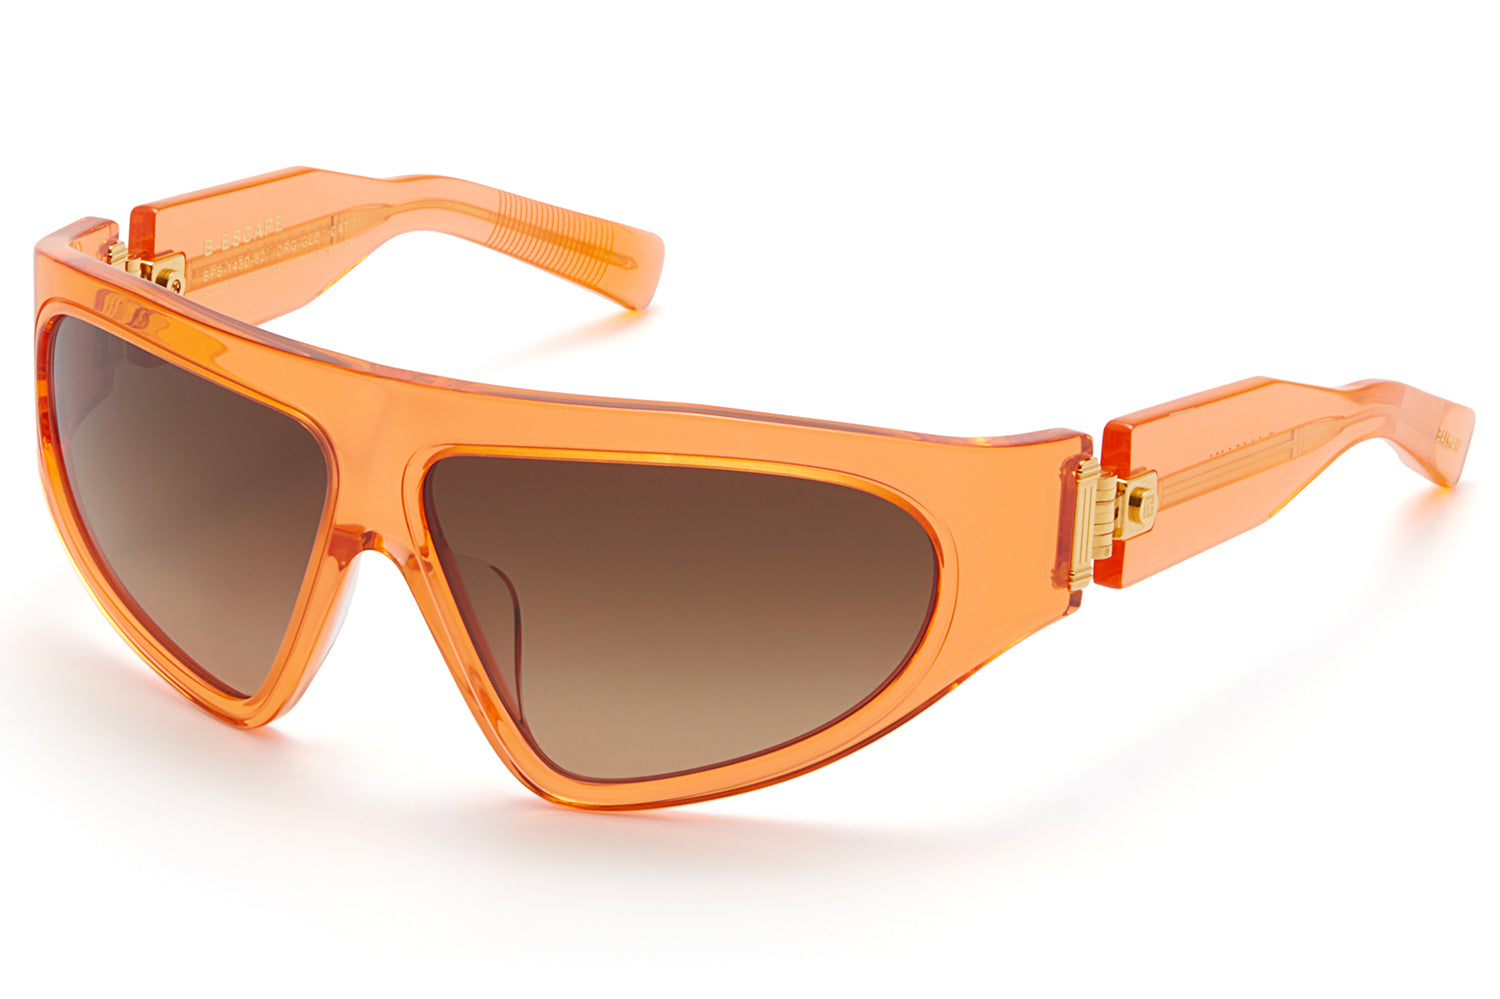 Louis Vuitton Escape Square Sunglasses 